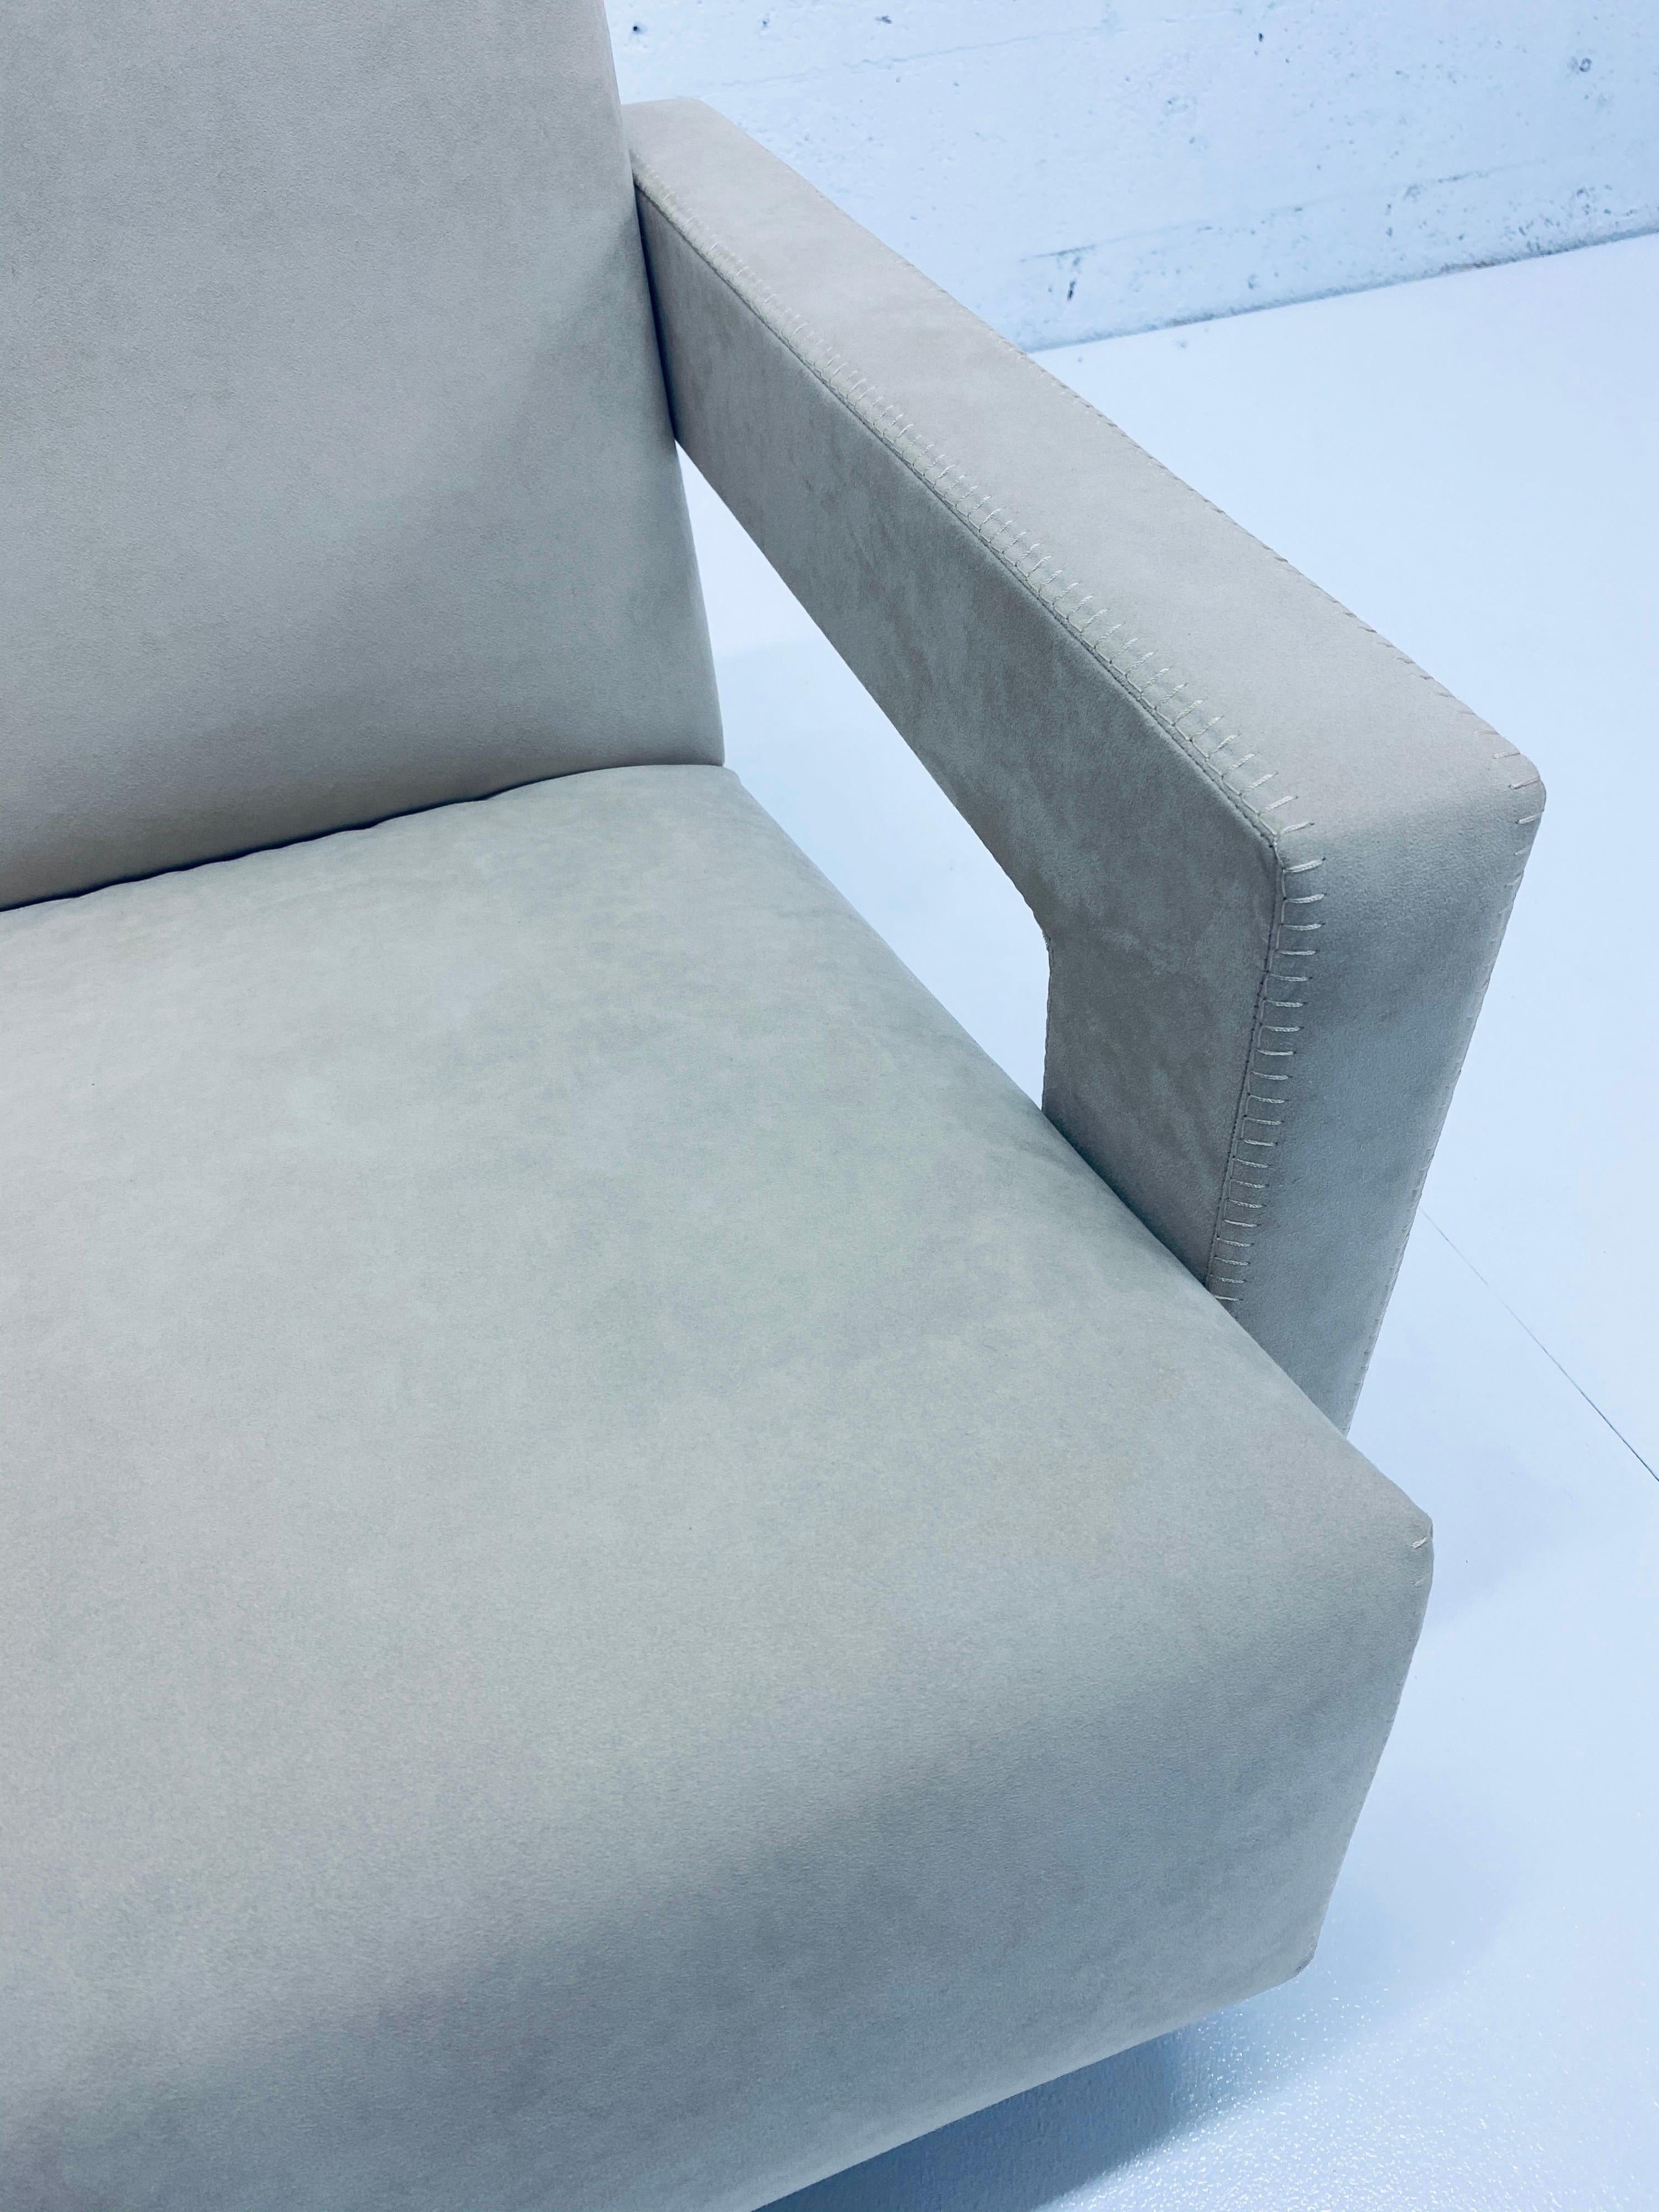 Gerrit Rietveld “Utrecht” Lounge Chair for Cassina 3